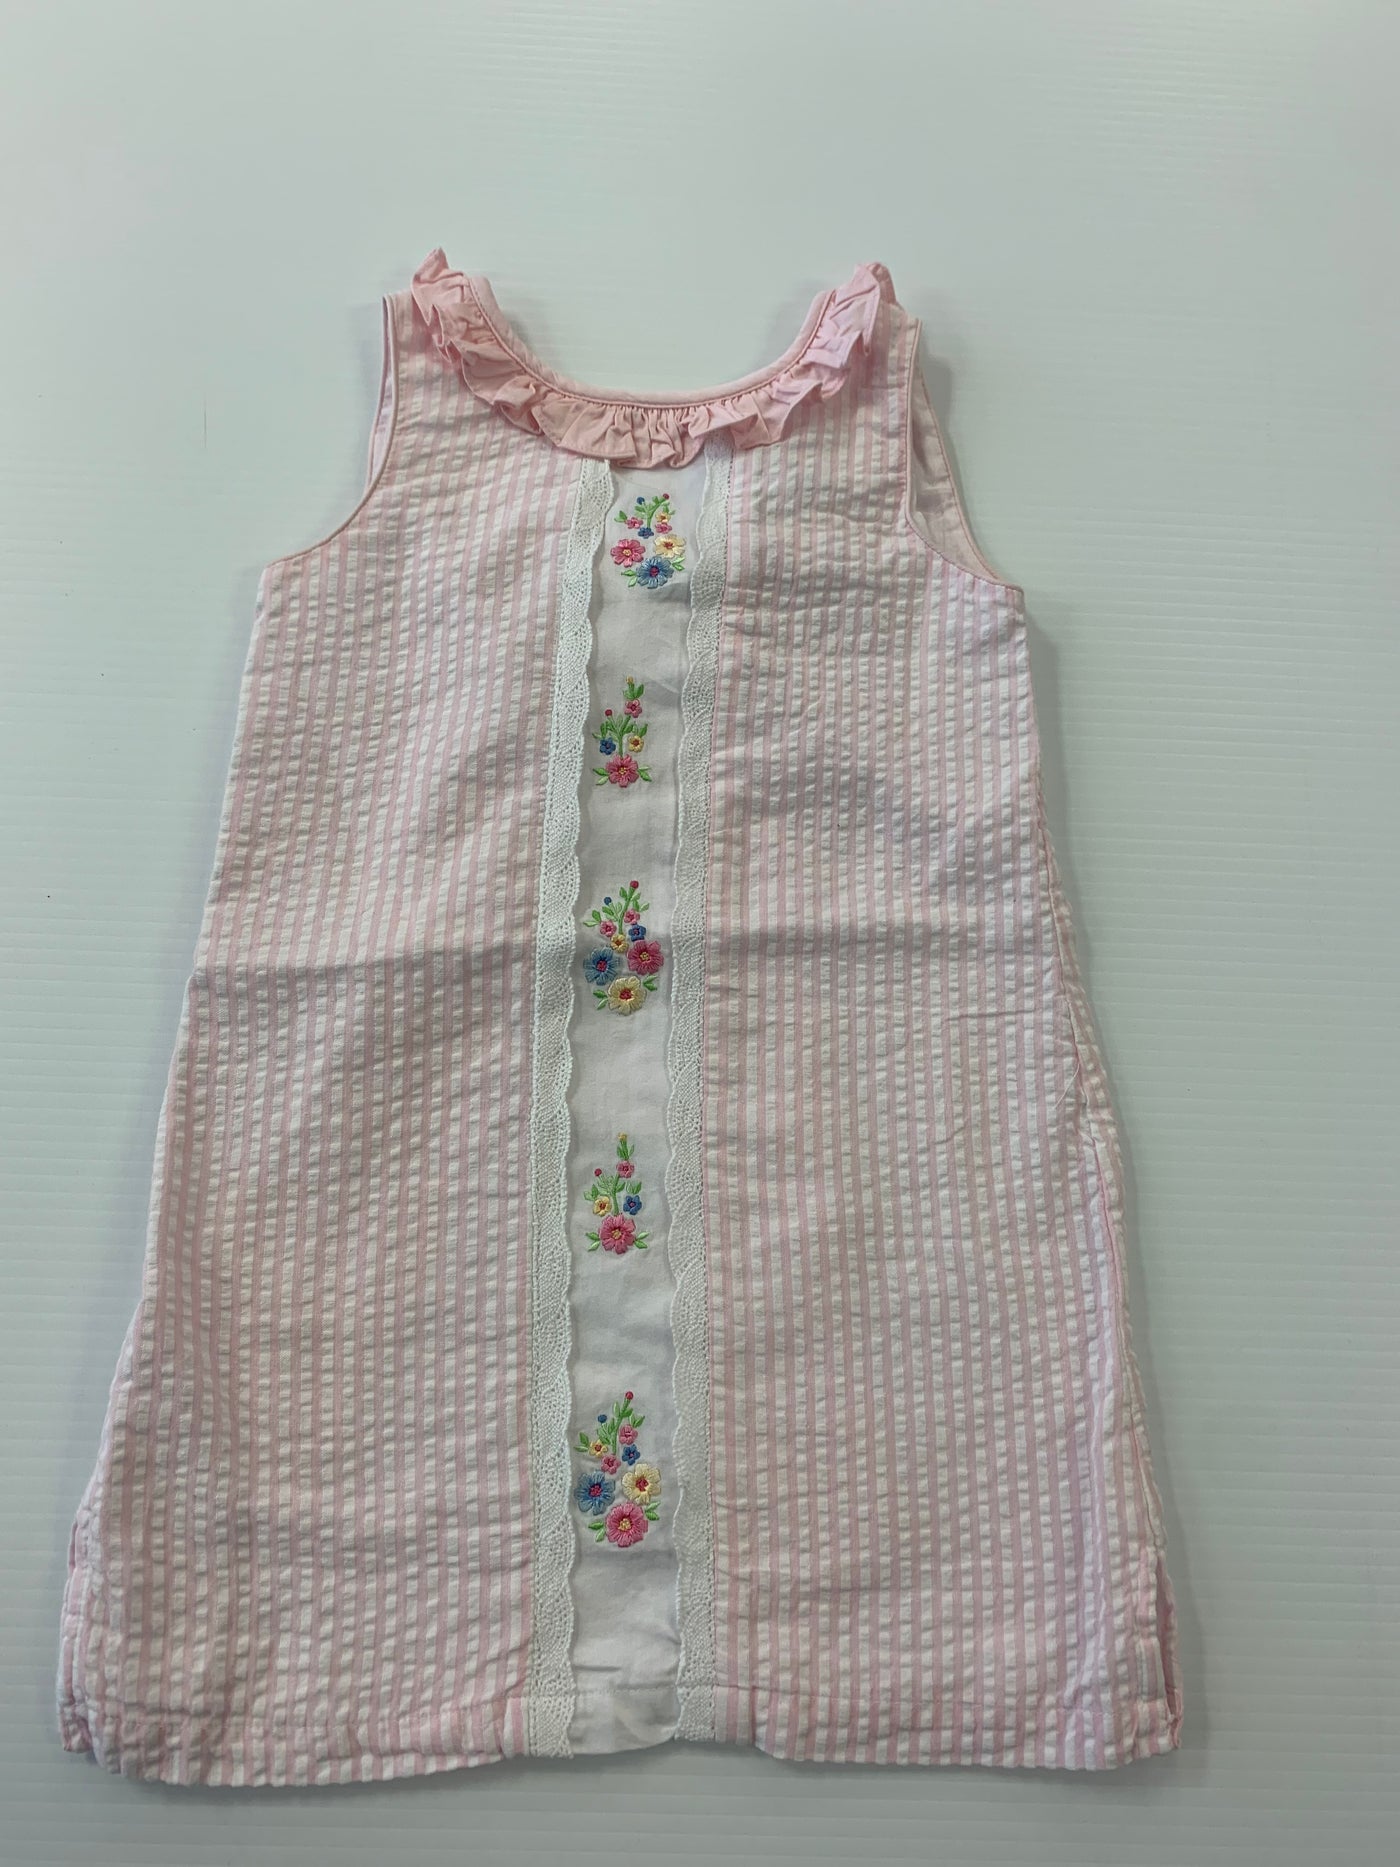 Seersucker embroidered floral dress